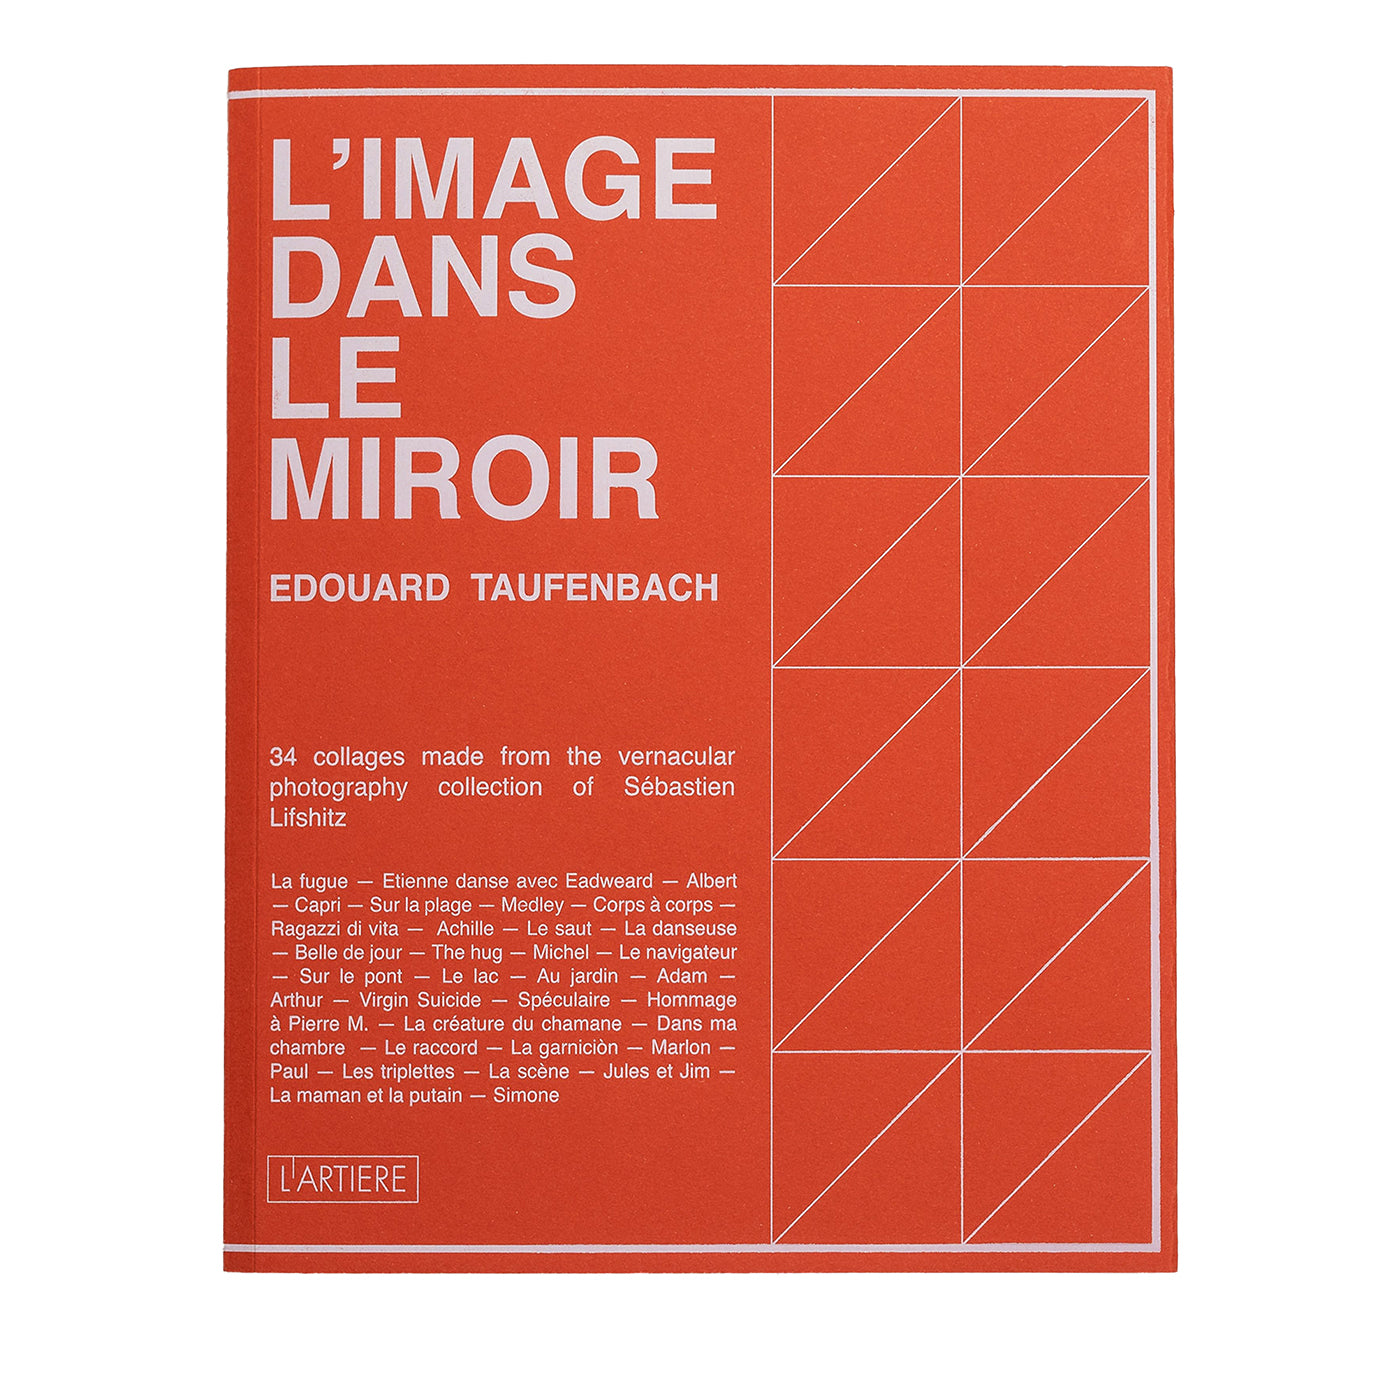 L'image dans le miroir - Edouard Taufenbach - Limitierte Auflage von 25 Exemplaren - Hauptansicht